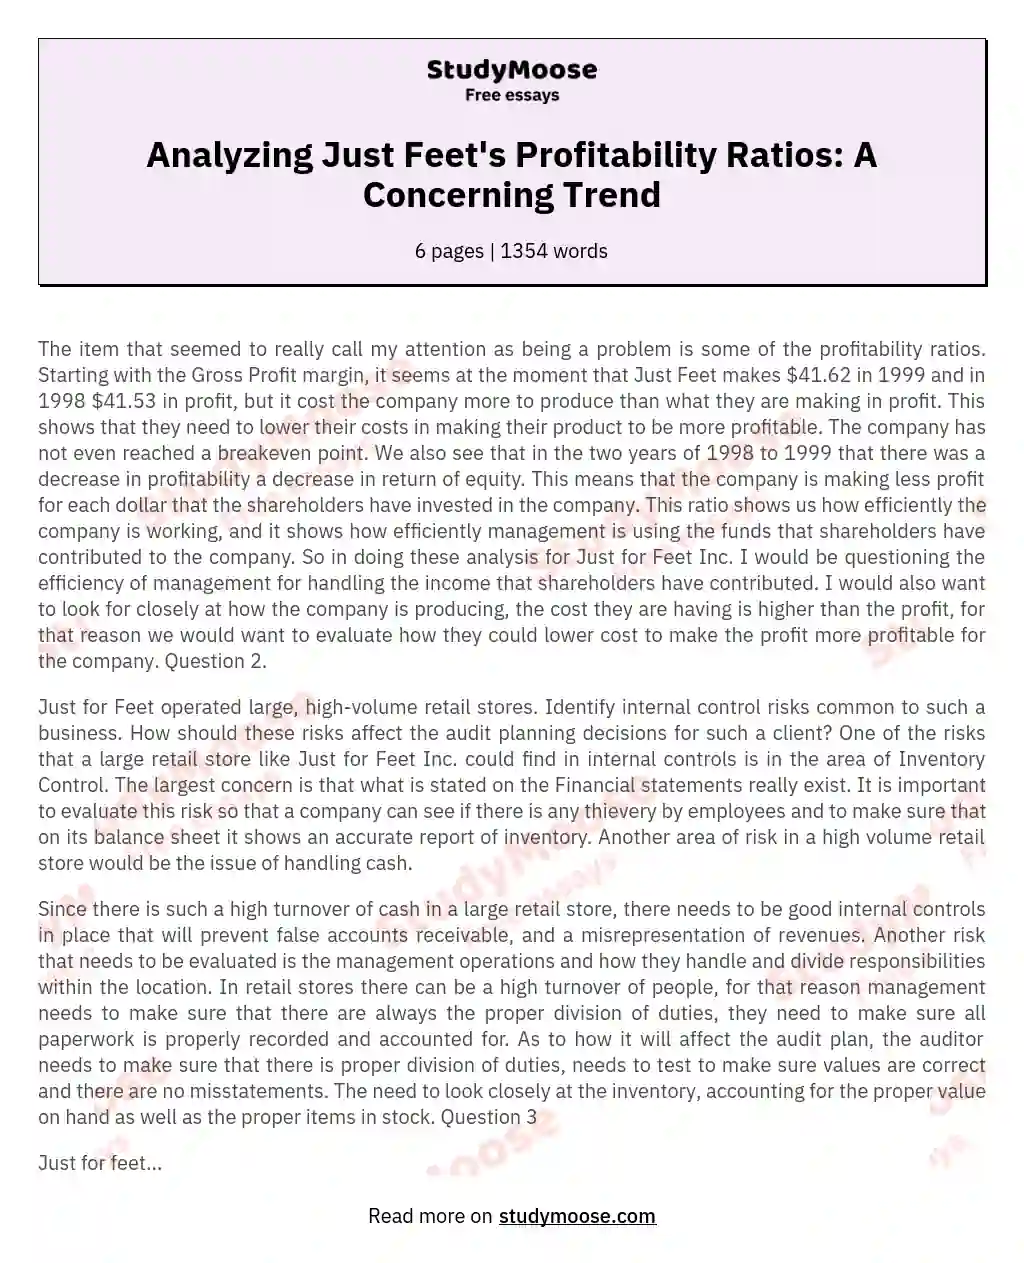 Analyzing Just Feet's Profitability Ratios: A Concerning Trend essay